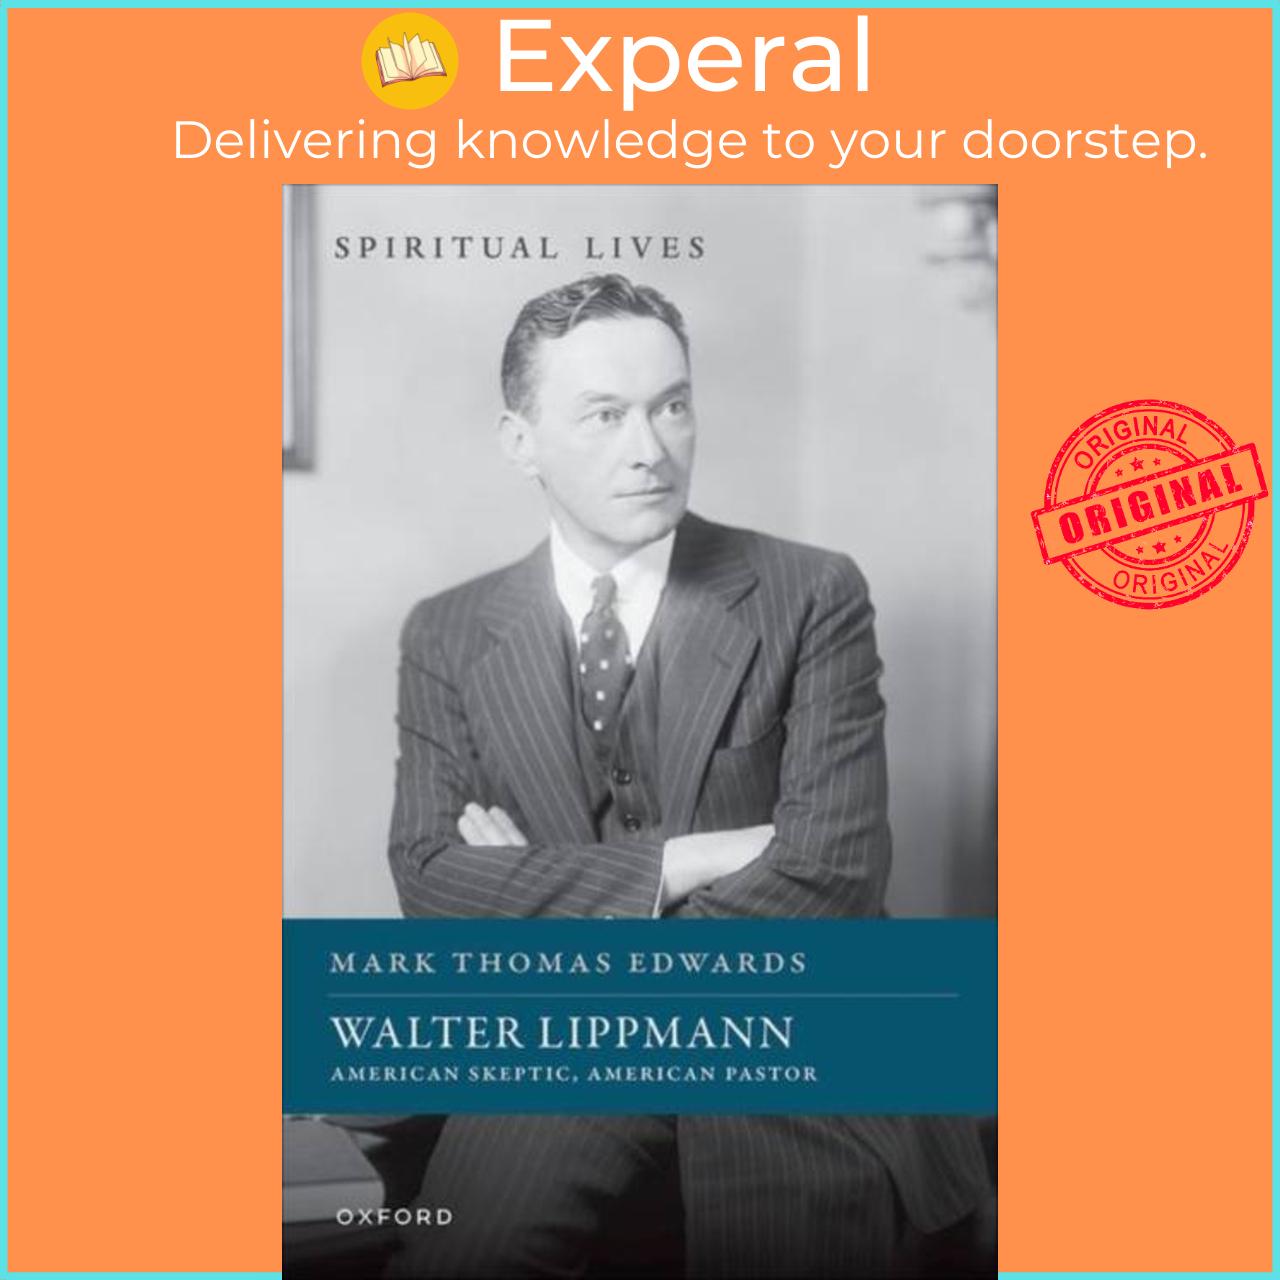 Sách - Walter Lippmann - American Skeptic, American Pastor by Prof Mark Thomas Edwards (UK edition, hardcover)